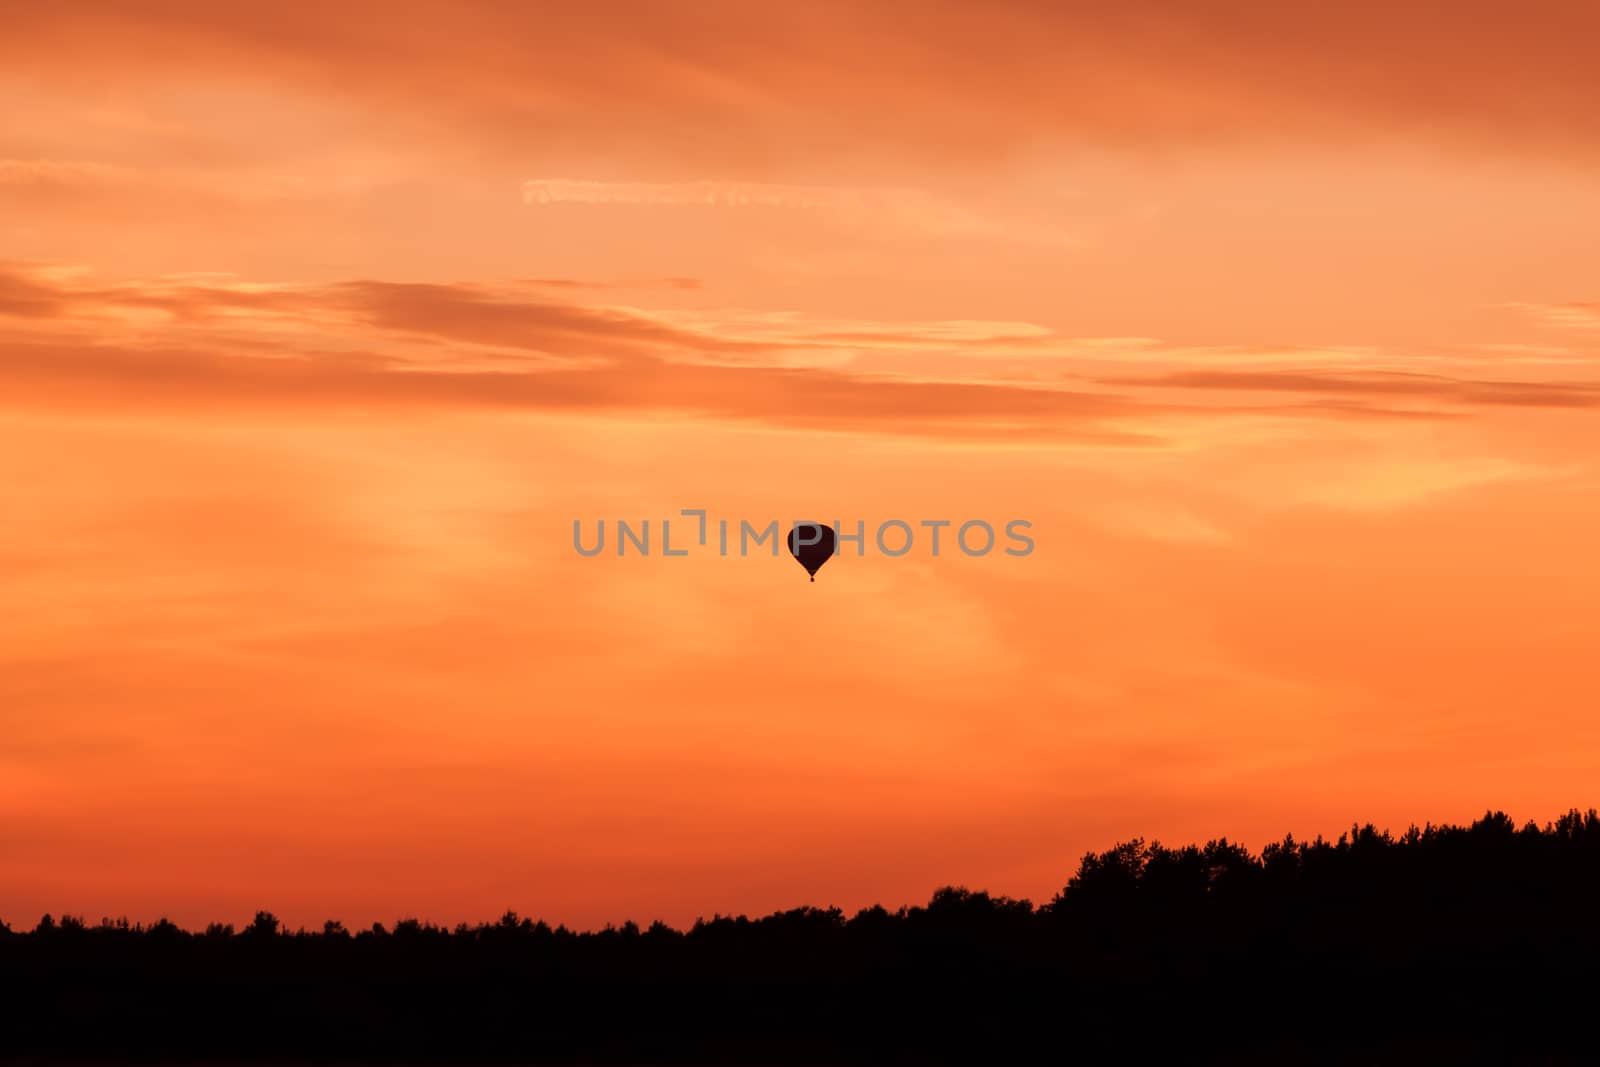 Hot air balloon flying at orange sunset sky